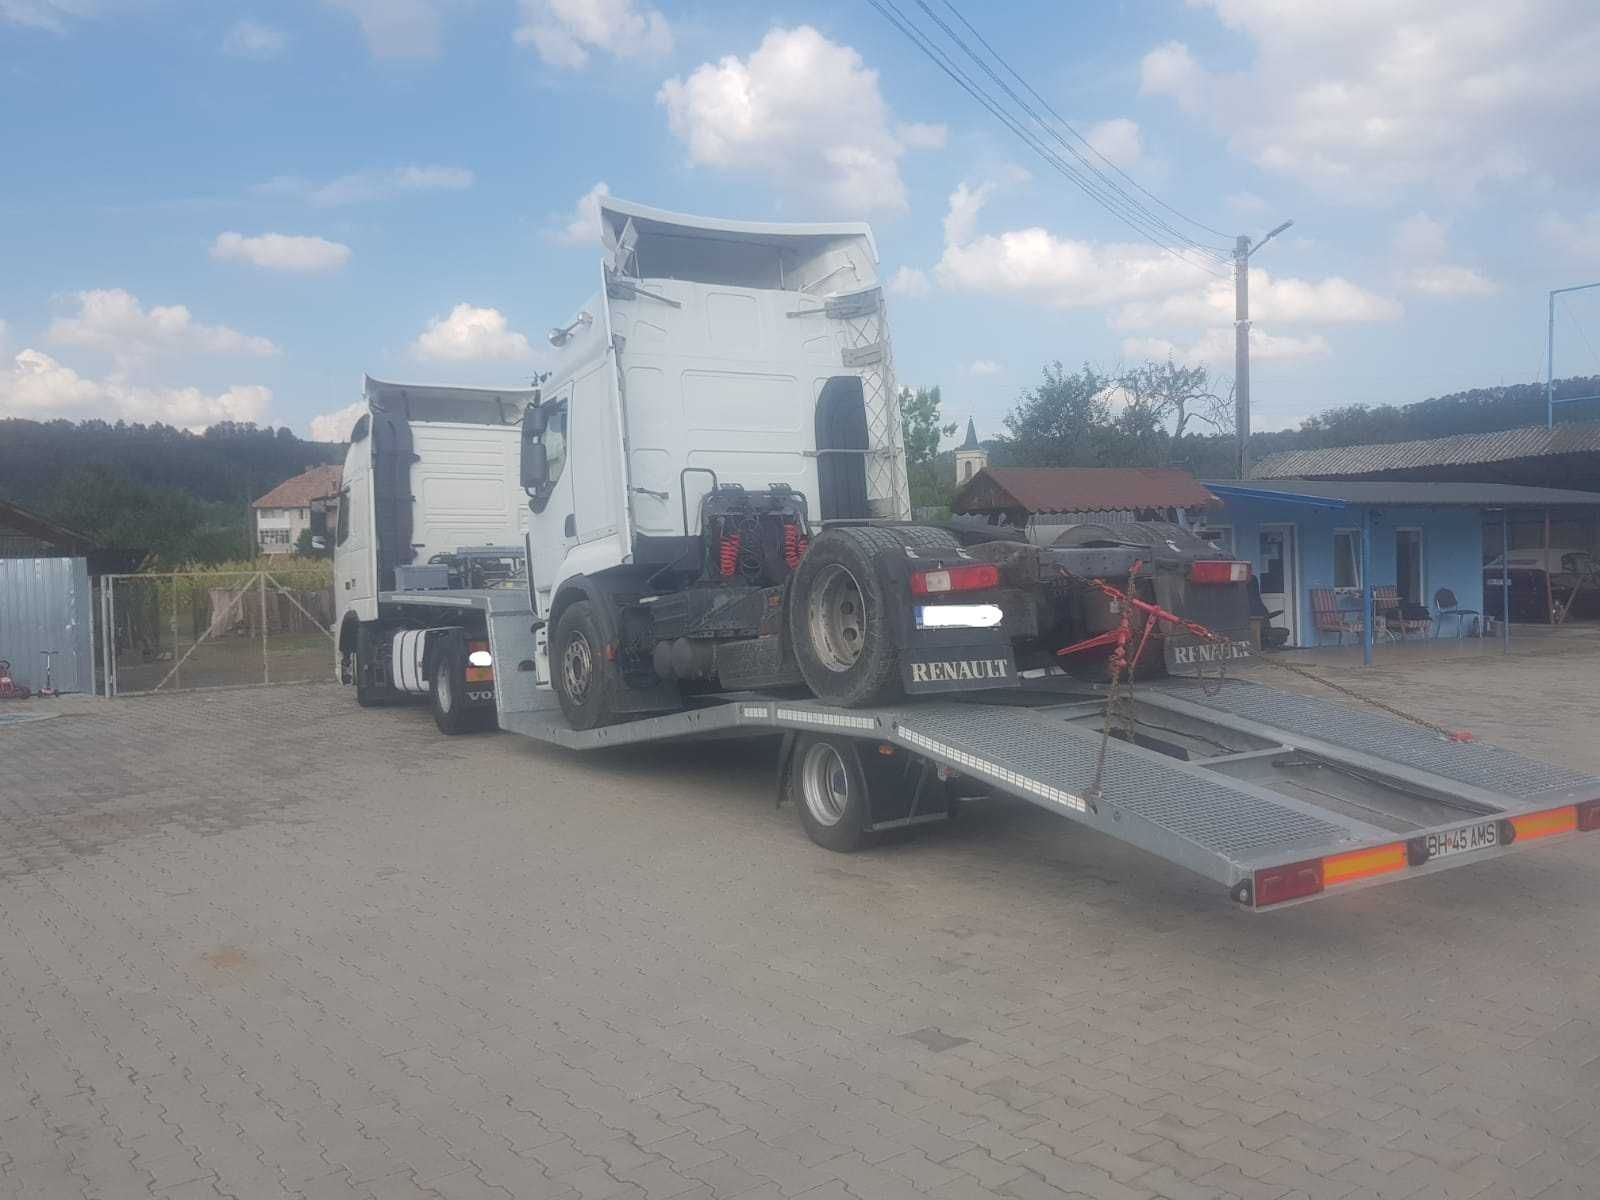 Inchiriez trailer fara cap tractor pt transport camioane,utilaje